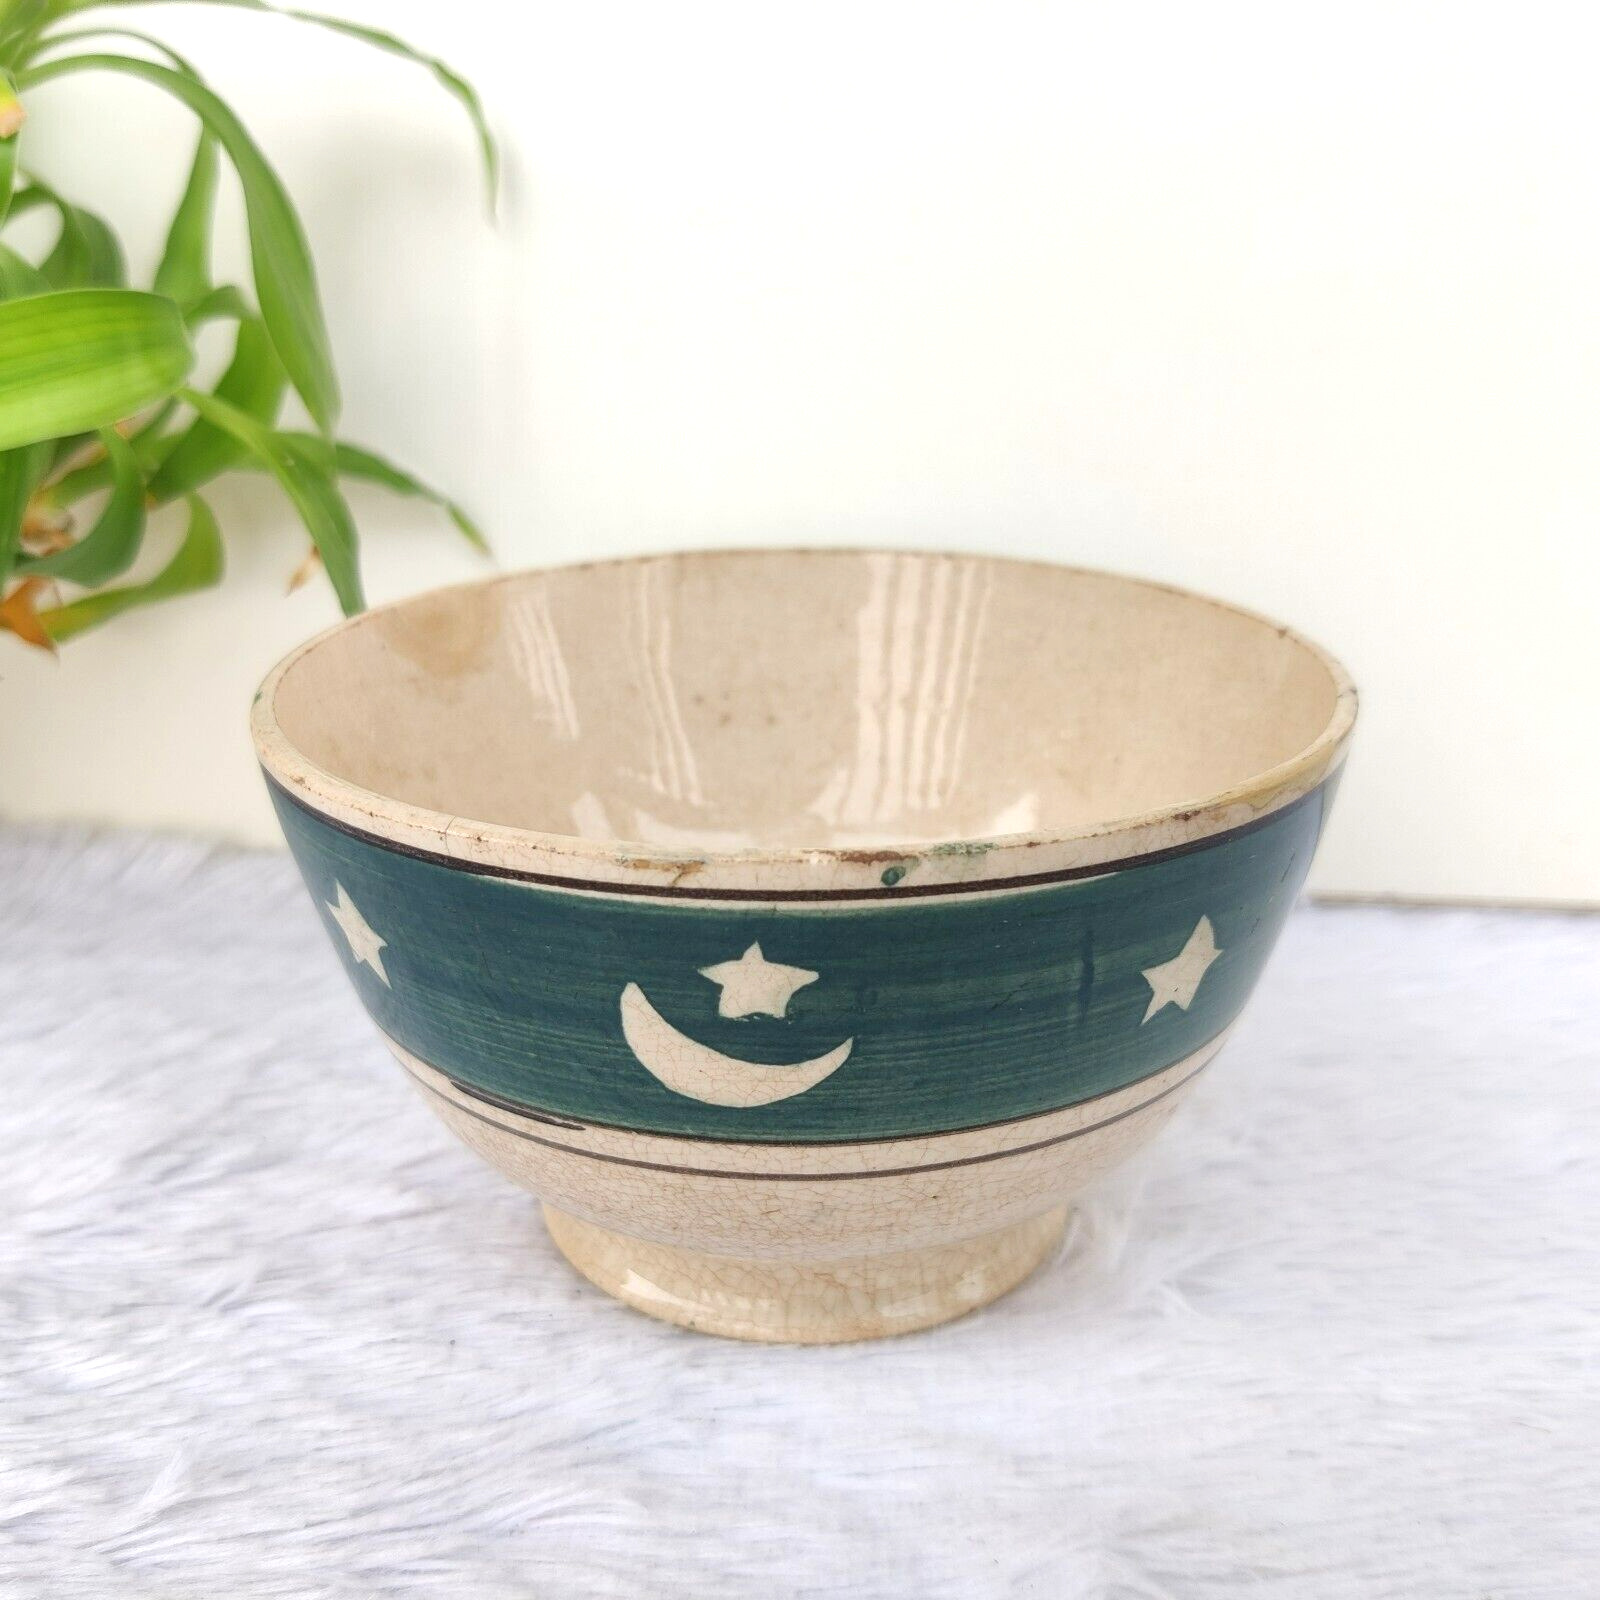 19c Vintage Crescent Moon Stars Decorated Ceramic Bowl Islamic Collectible C175